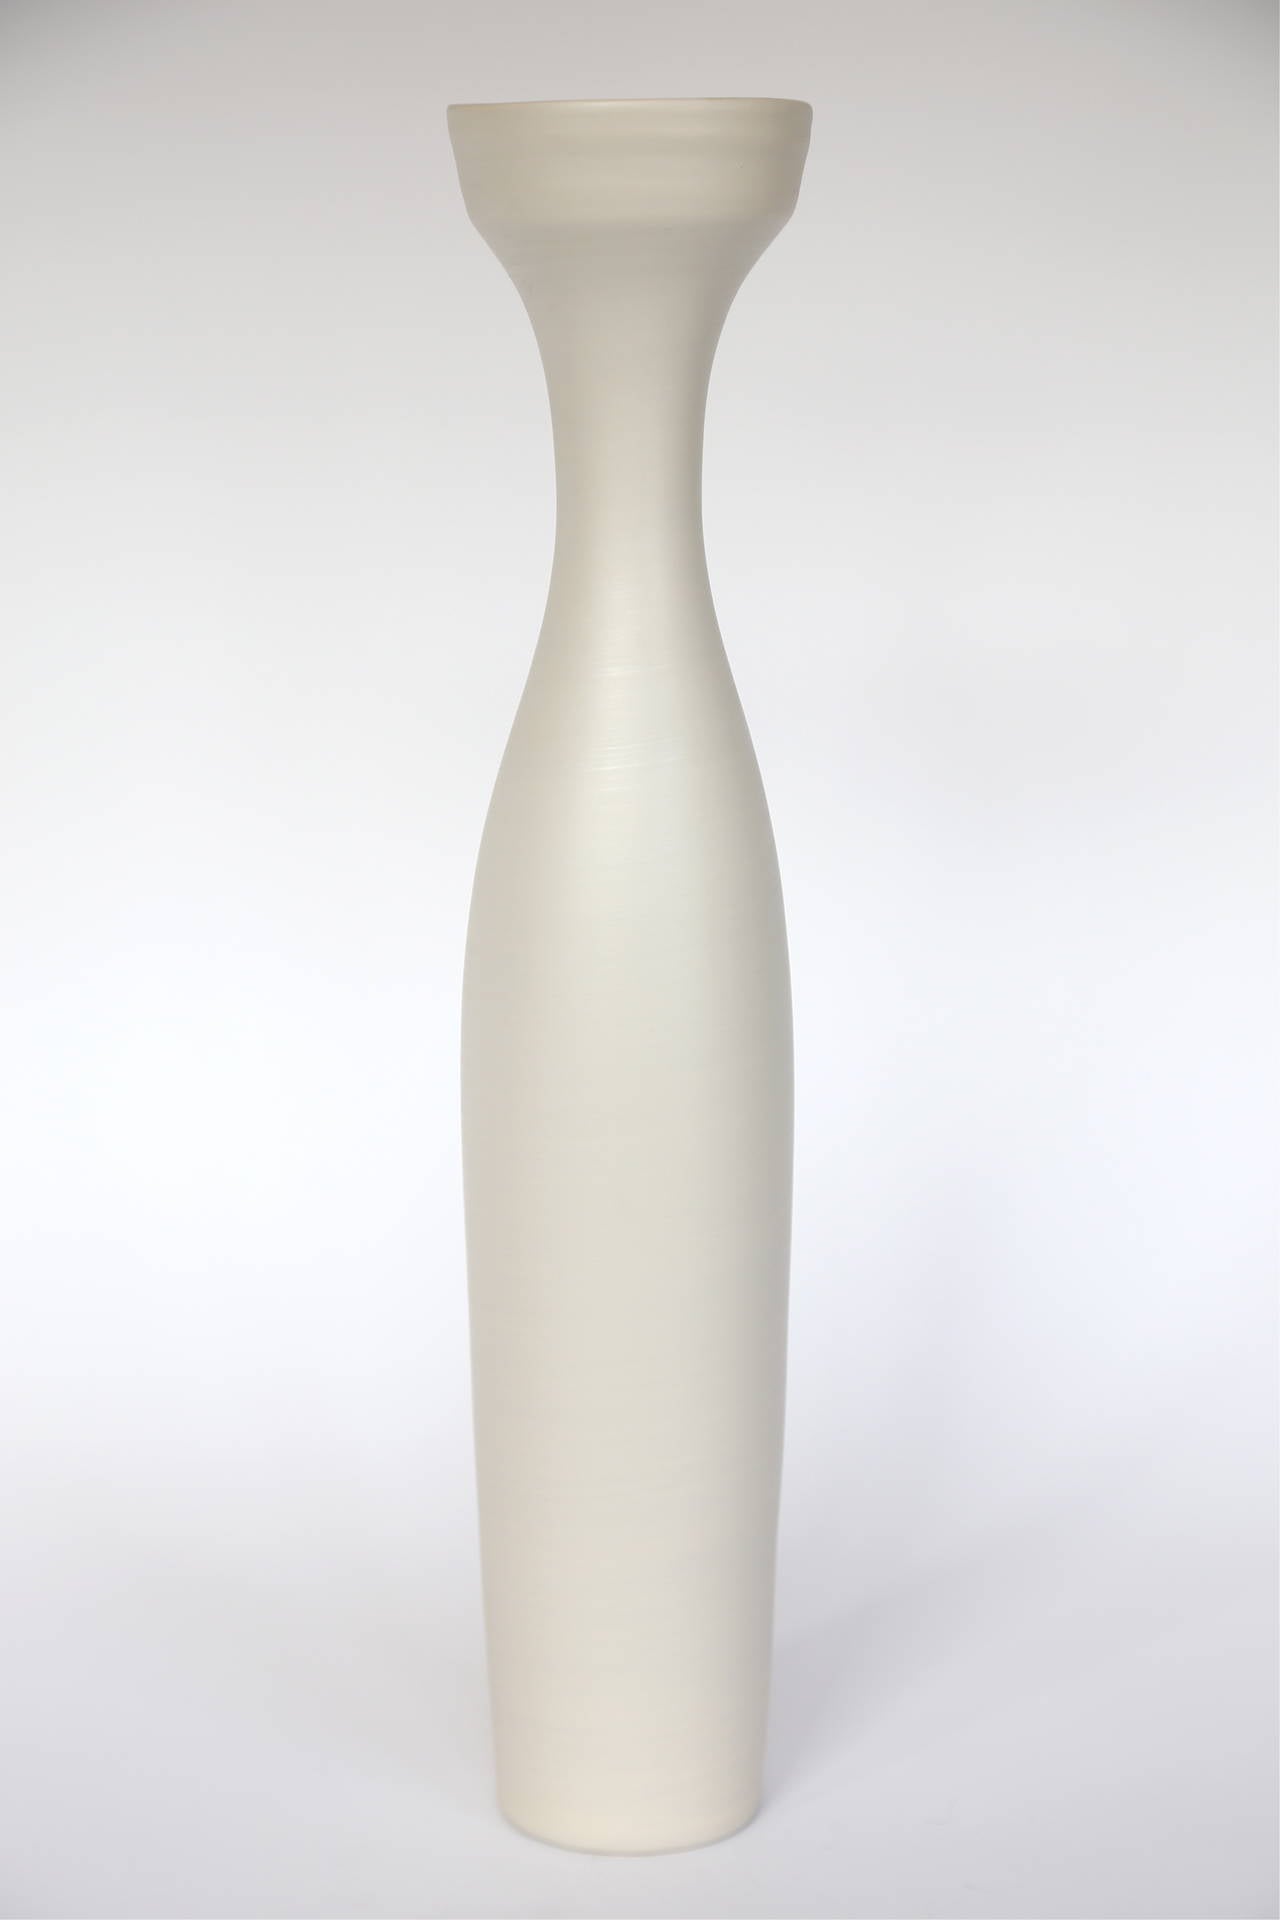 Italian Rina Menardi Handmade Ceramic Angel Vases in Linen, Dark Bronze and Light Brown For Sale